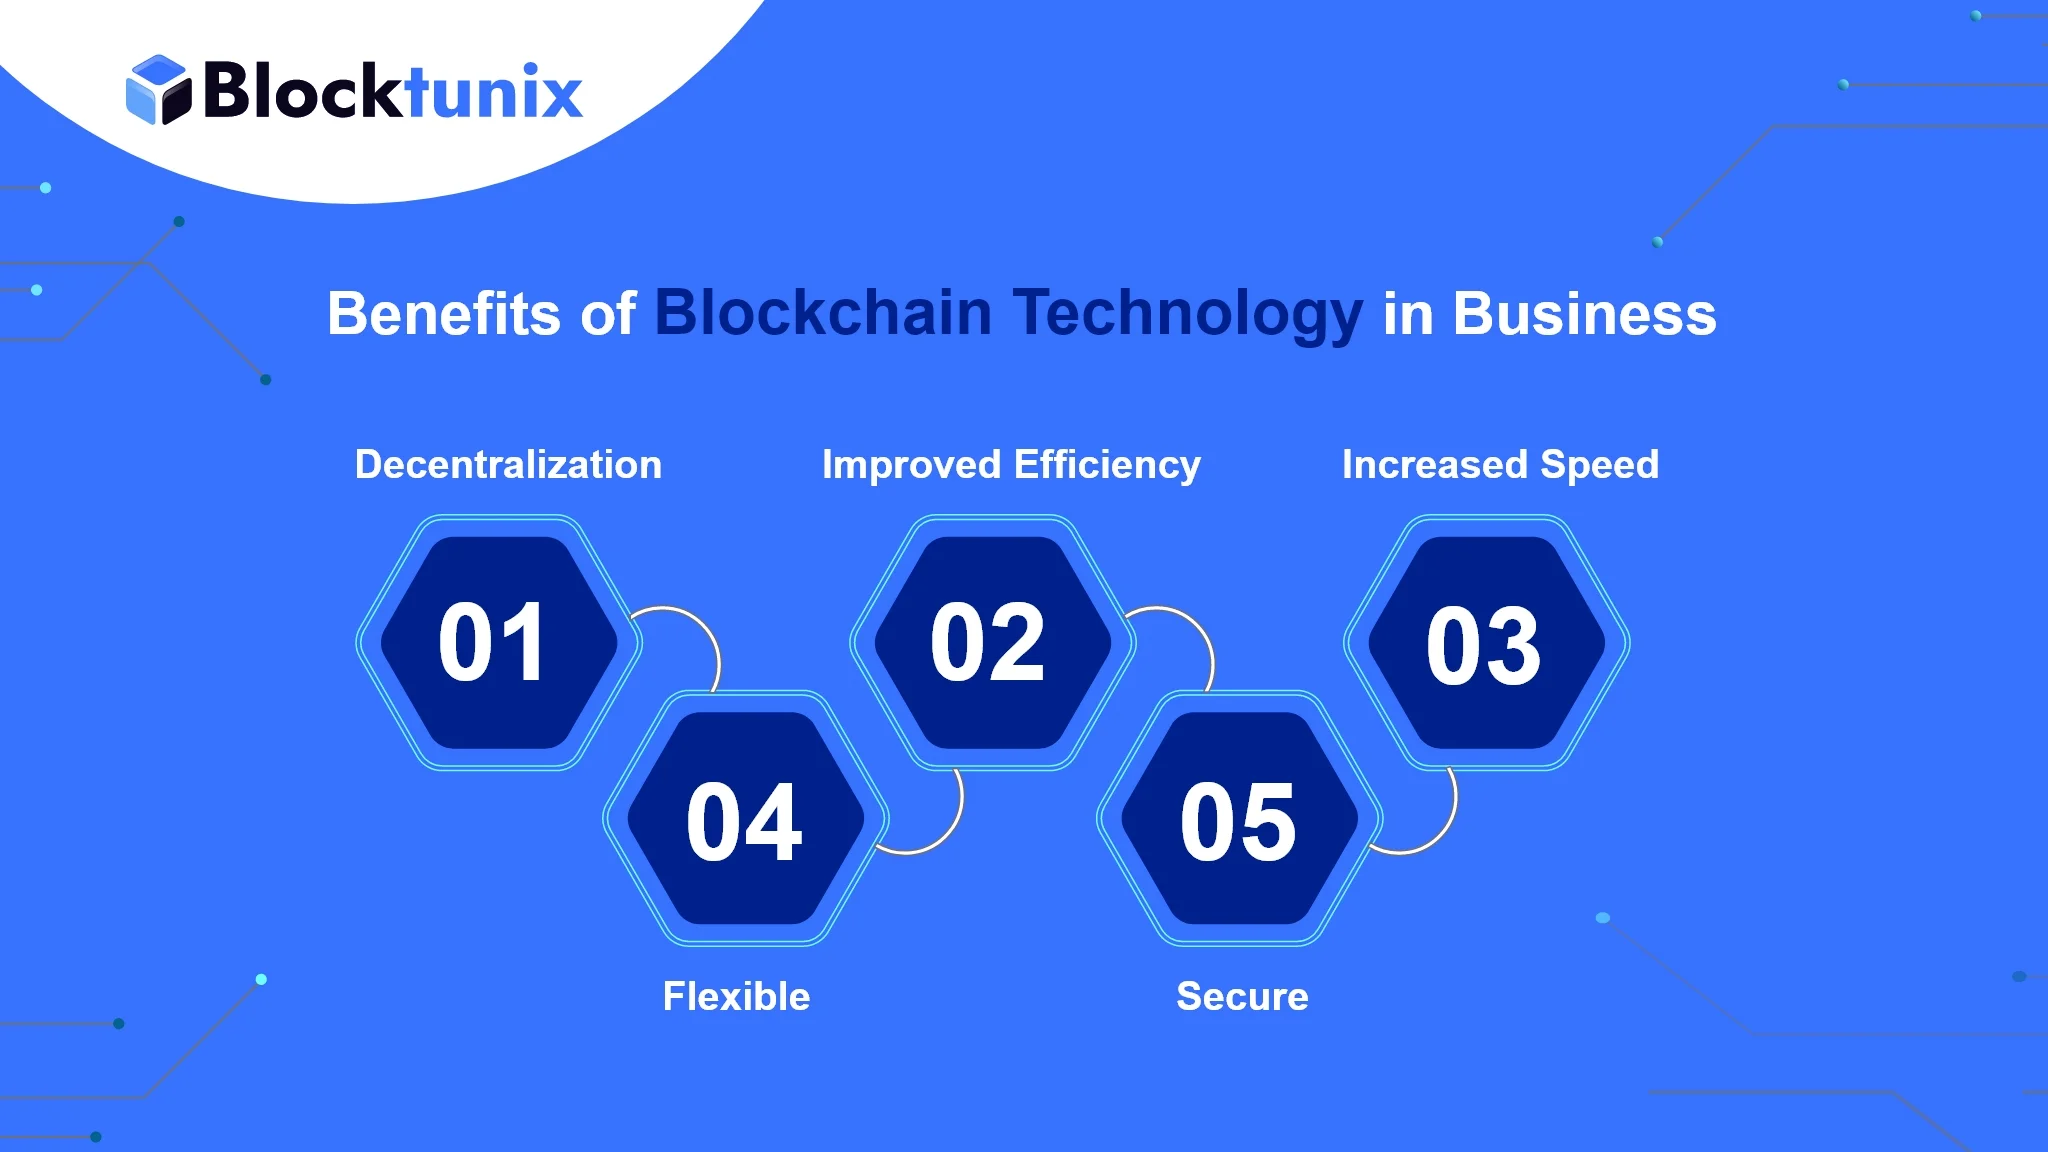 Benefits of blockchain in business